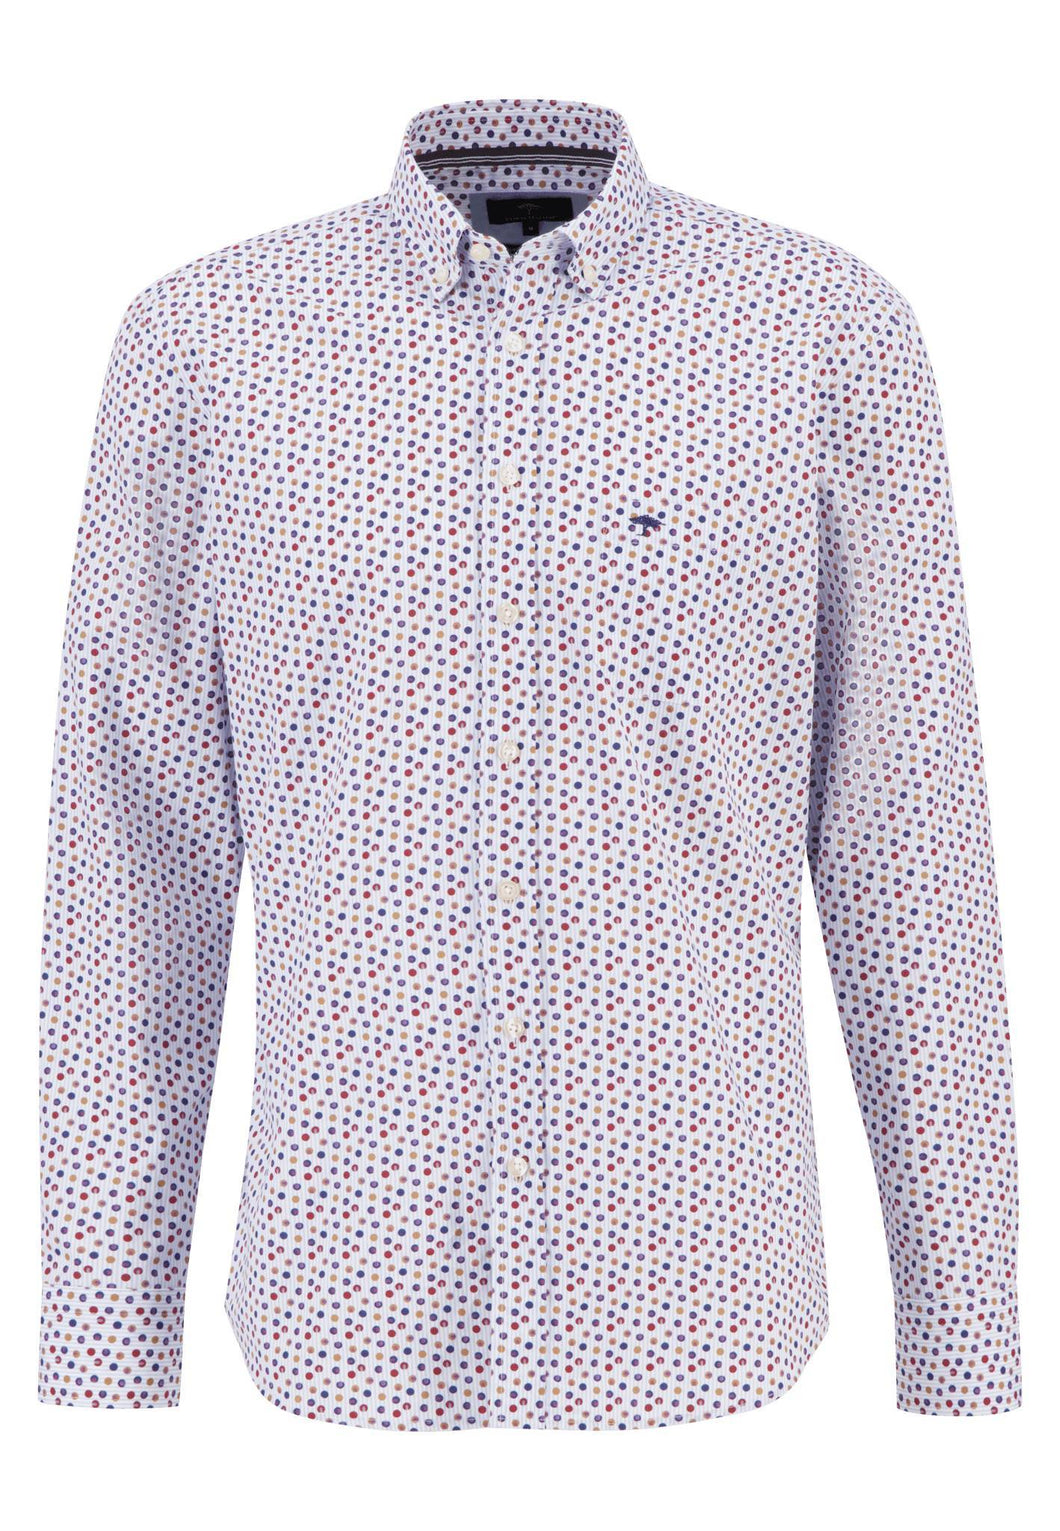 New Fynch Hatton Colourful Spot Long Sleeve Shirt